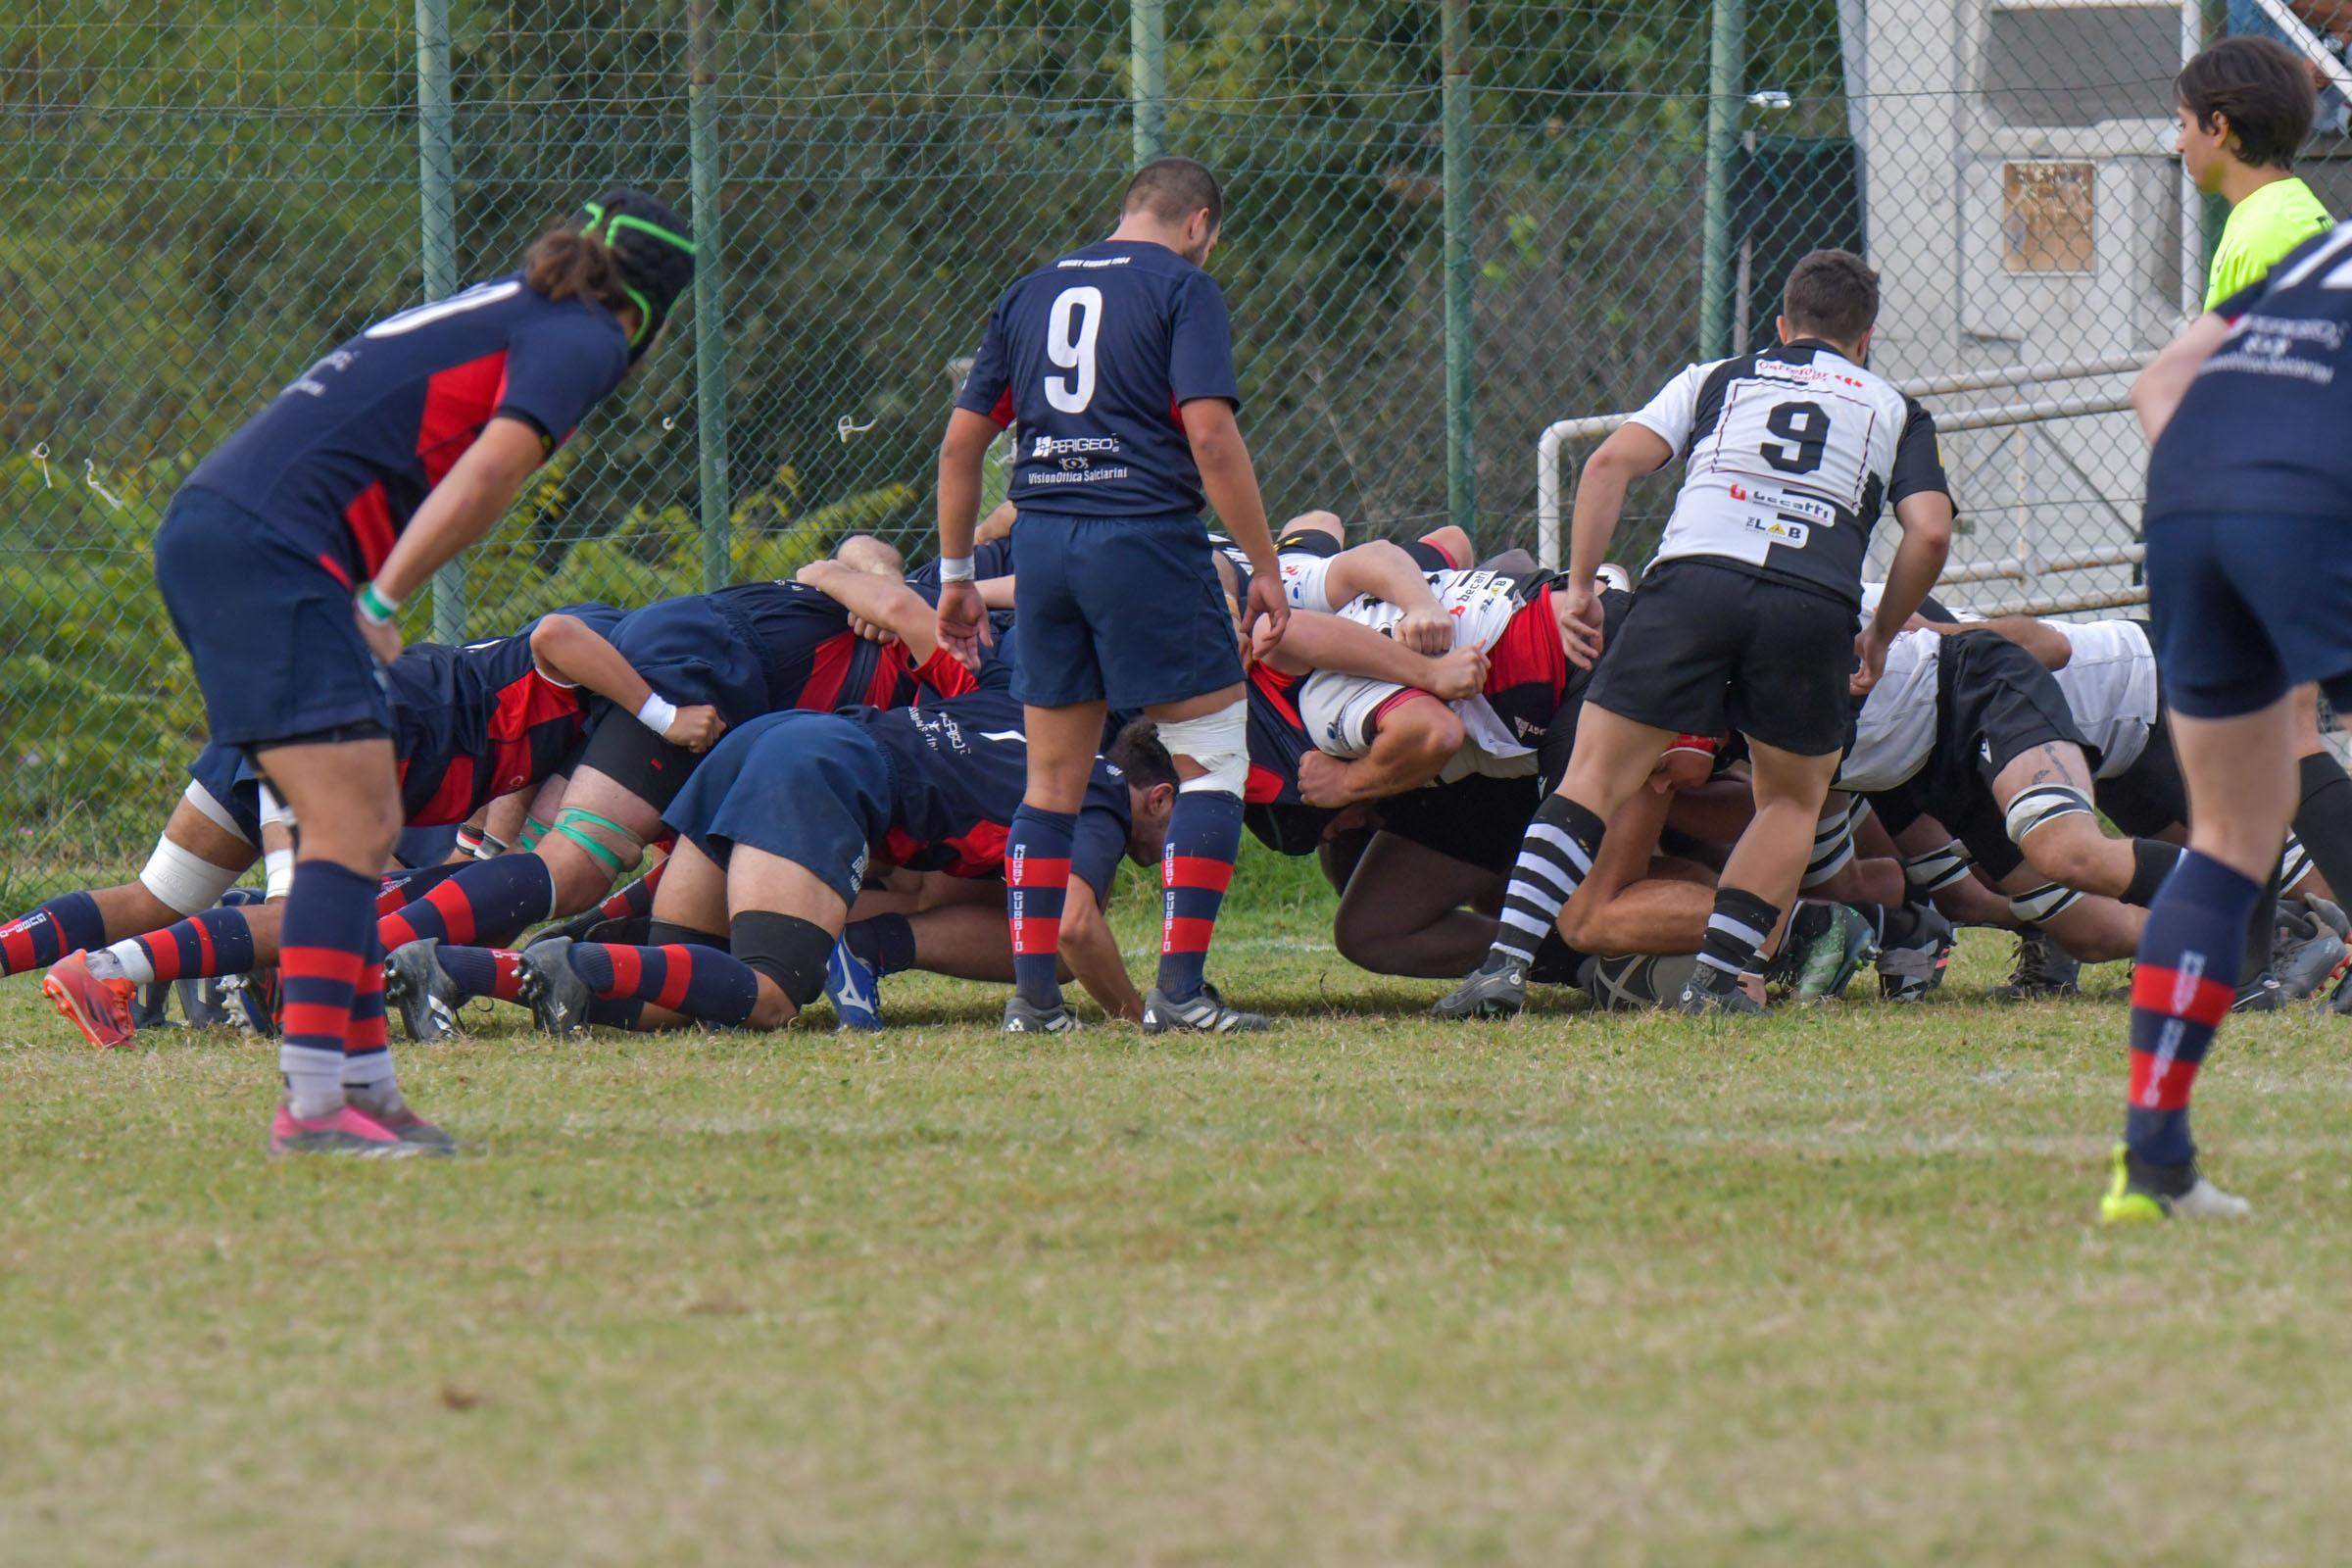 Banca Centro Cus Siena Rugby trionfa su Gubbio in una prestazione convincente | RadioSienaTv